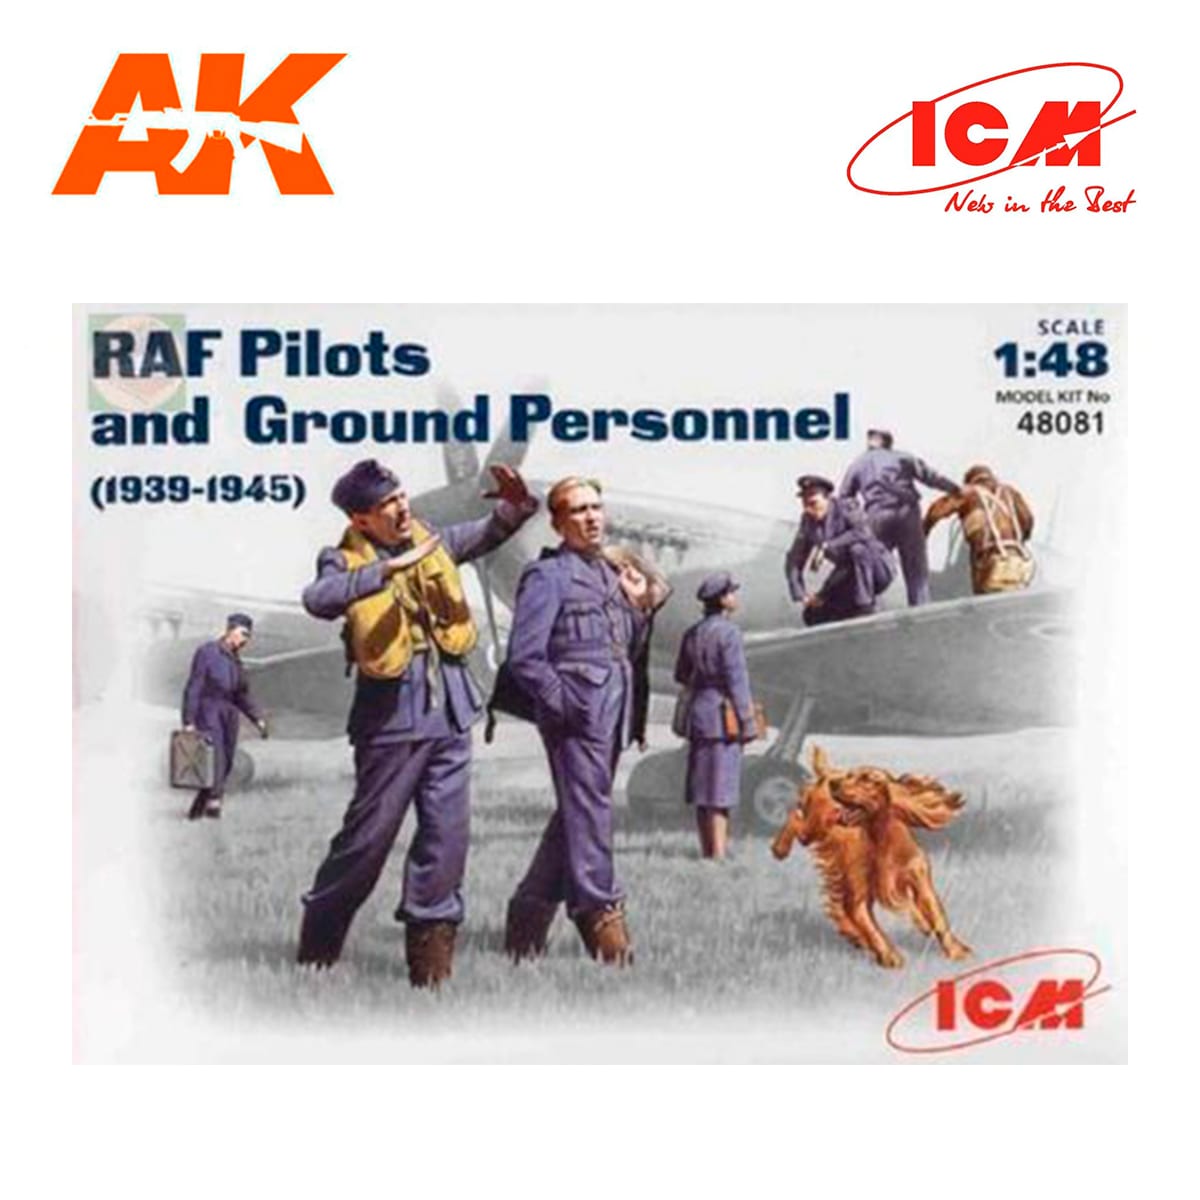 RAF Pilots and Ground Personnel (1939-1945)  (7 figures – 3 pilots, 3 mechanics, 1 WREN member, and dog figure) 1/48